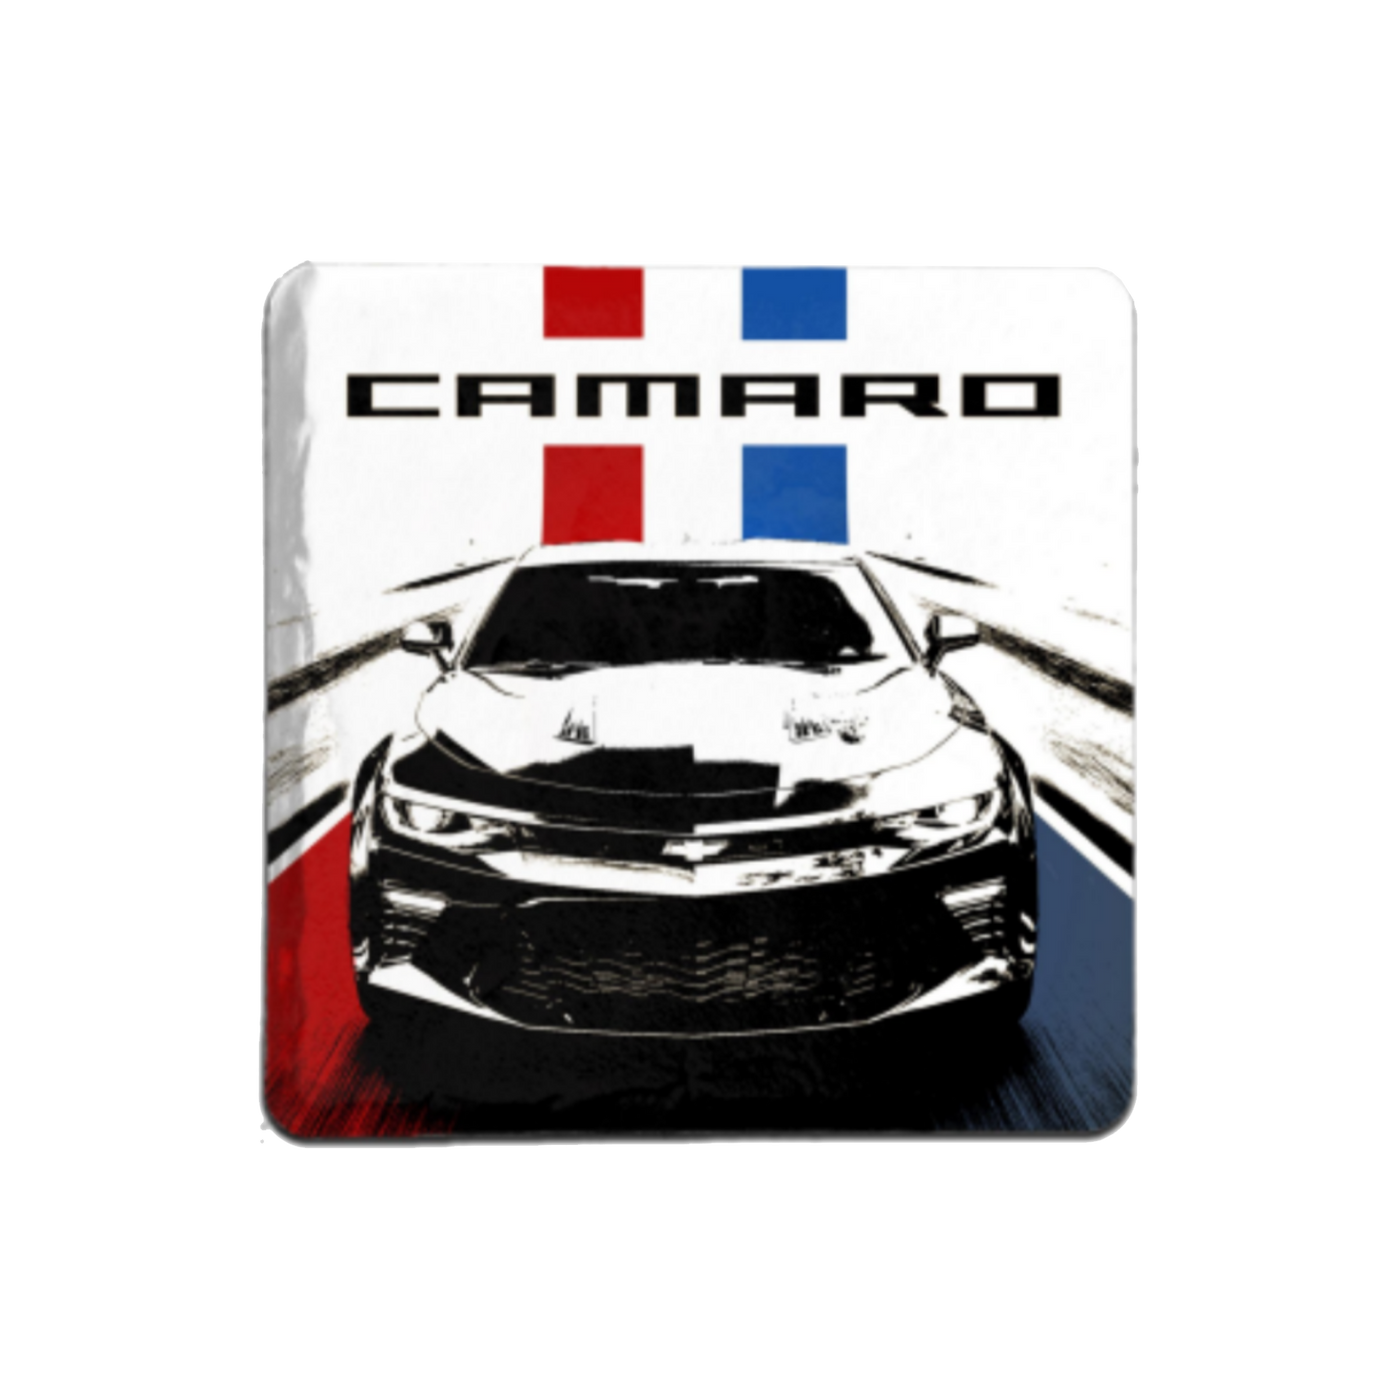 Camaro 6th Generation Profile Stone Coaster